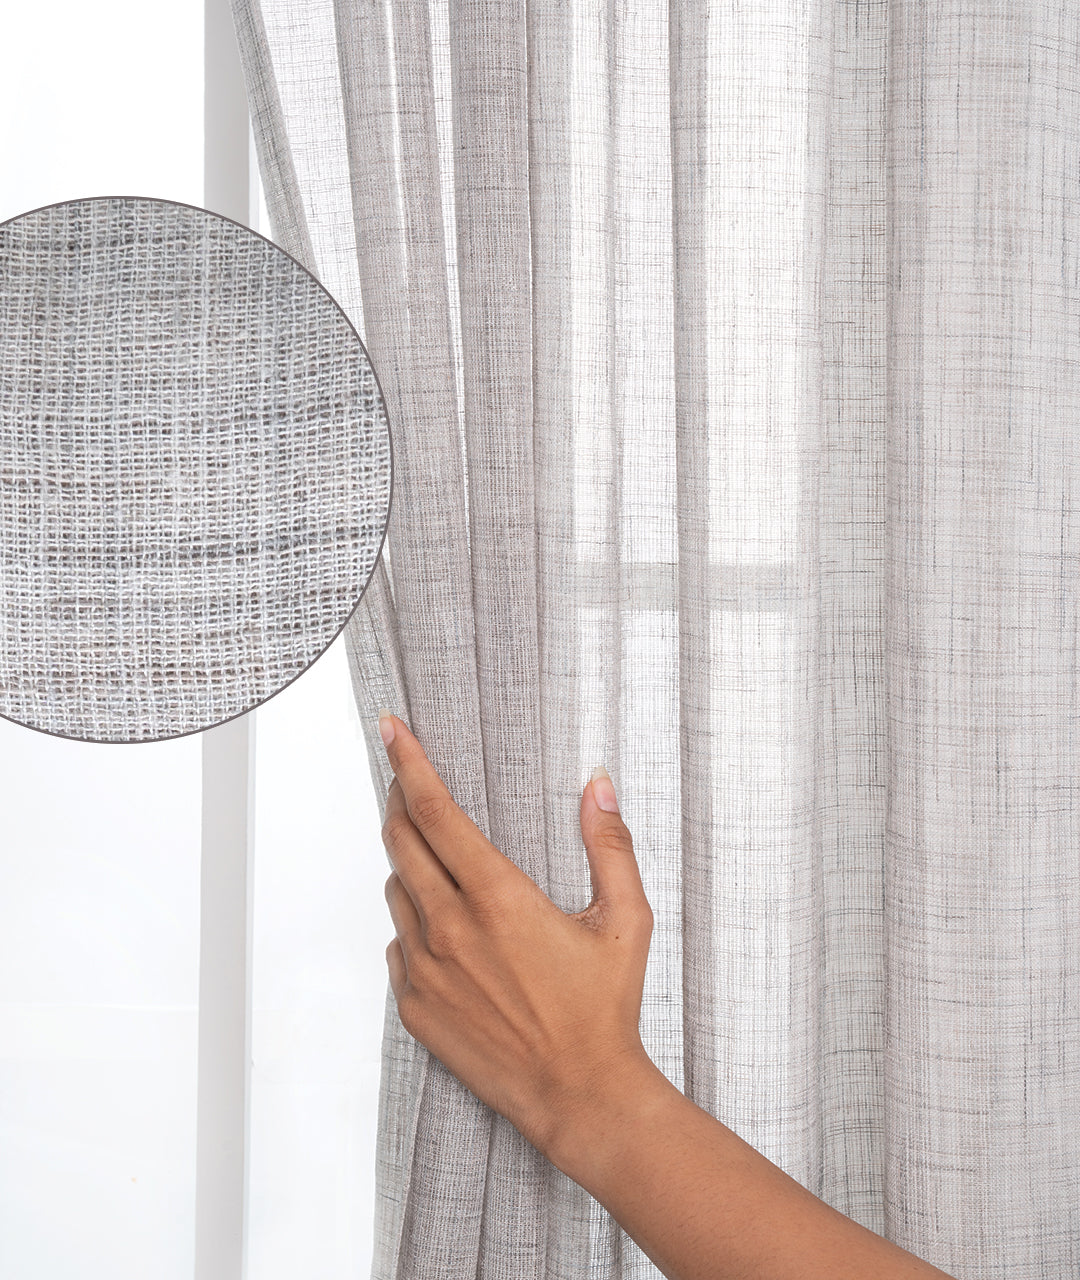 Light Grey Jute Textured Curtain | Set of 2 Panels